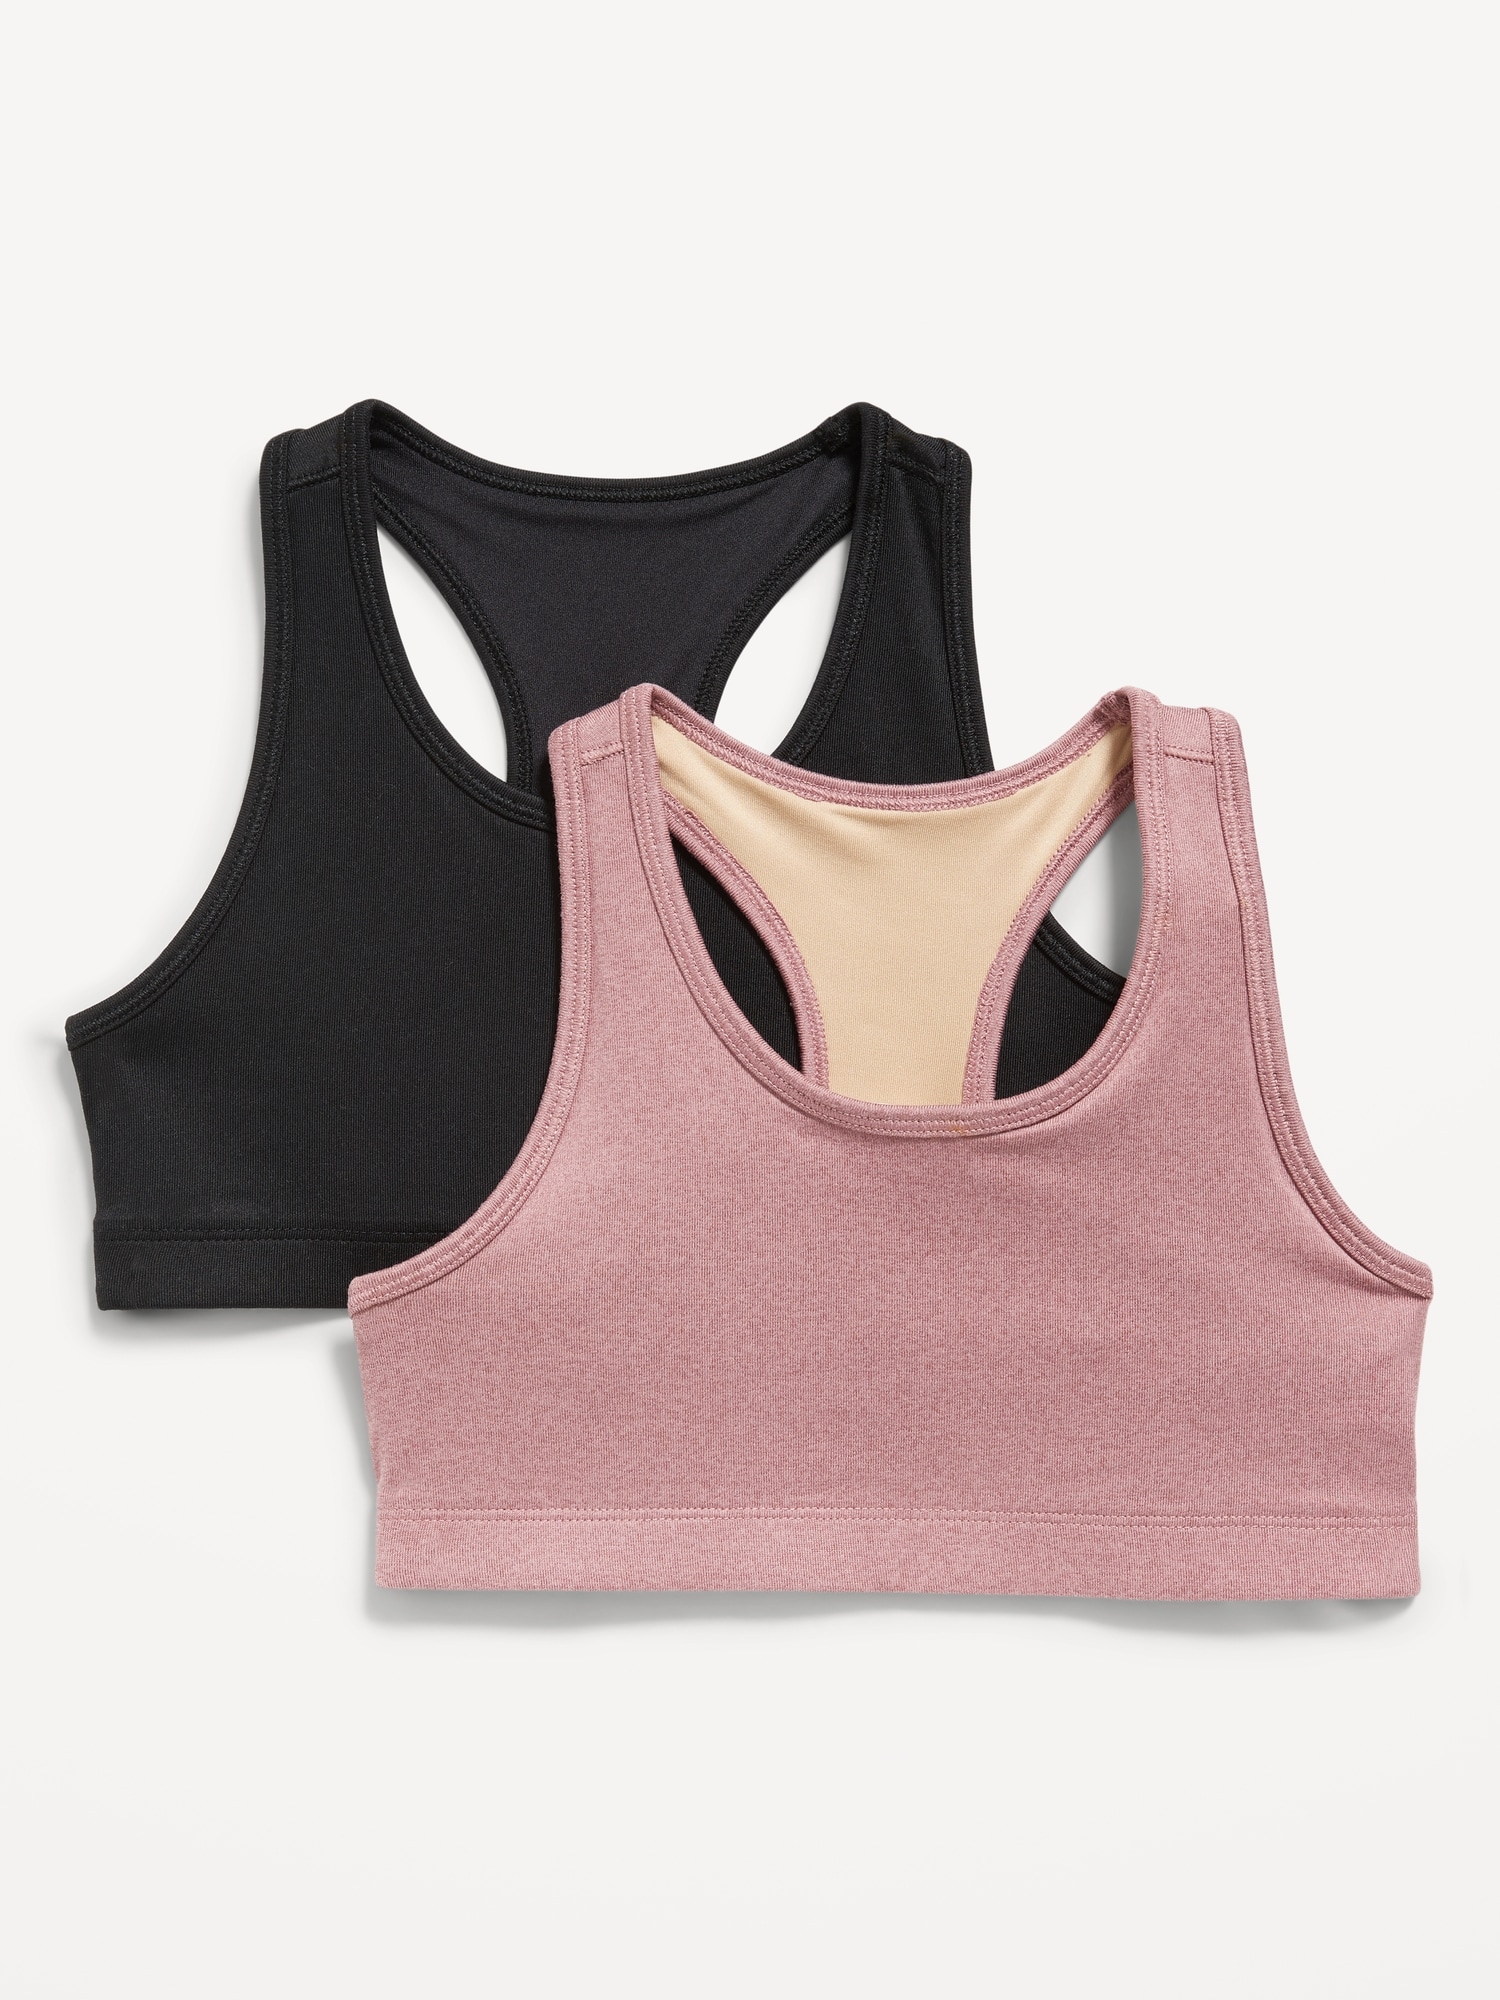 Old Navy, Intimates & Sleepwear, Pink Stretchy Sports Bra With Racer Back  Straps Medium